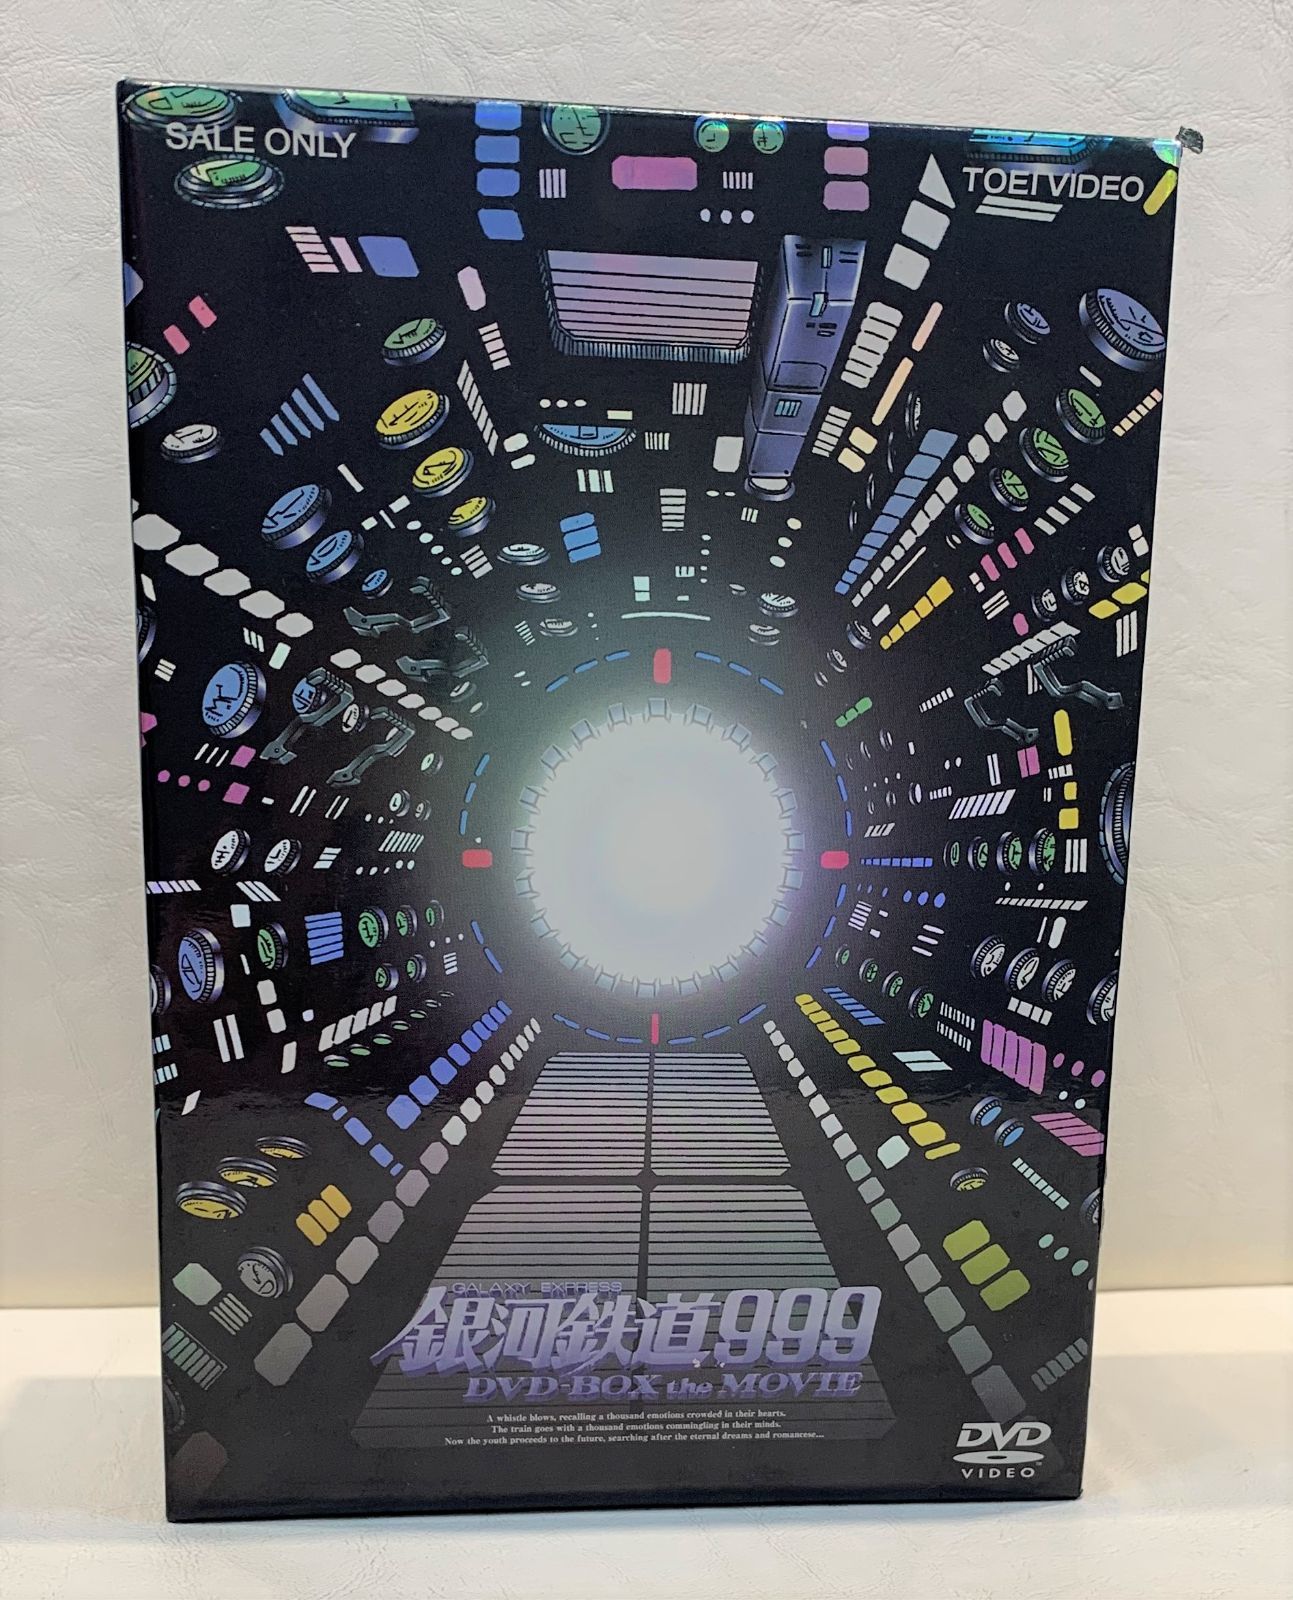 ◇銀河鉄道999 DVD-BOX the MOVIE〈初回生産限定・4枚組〉 - メルカリ